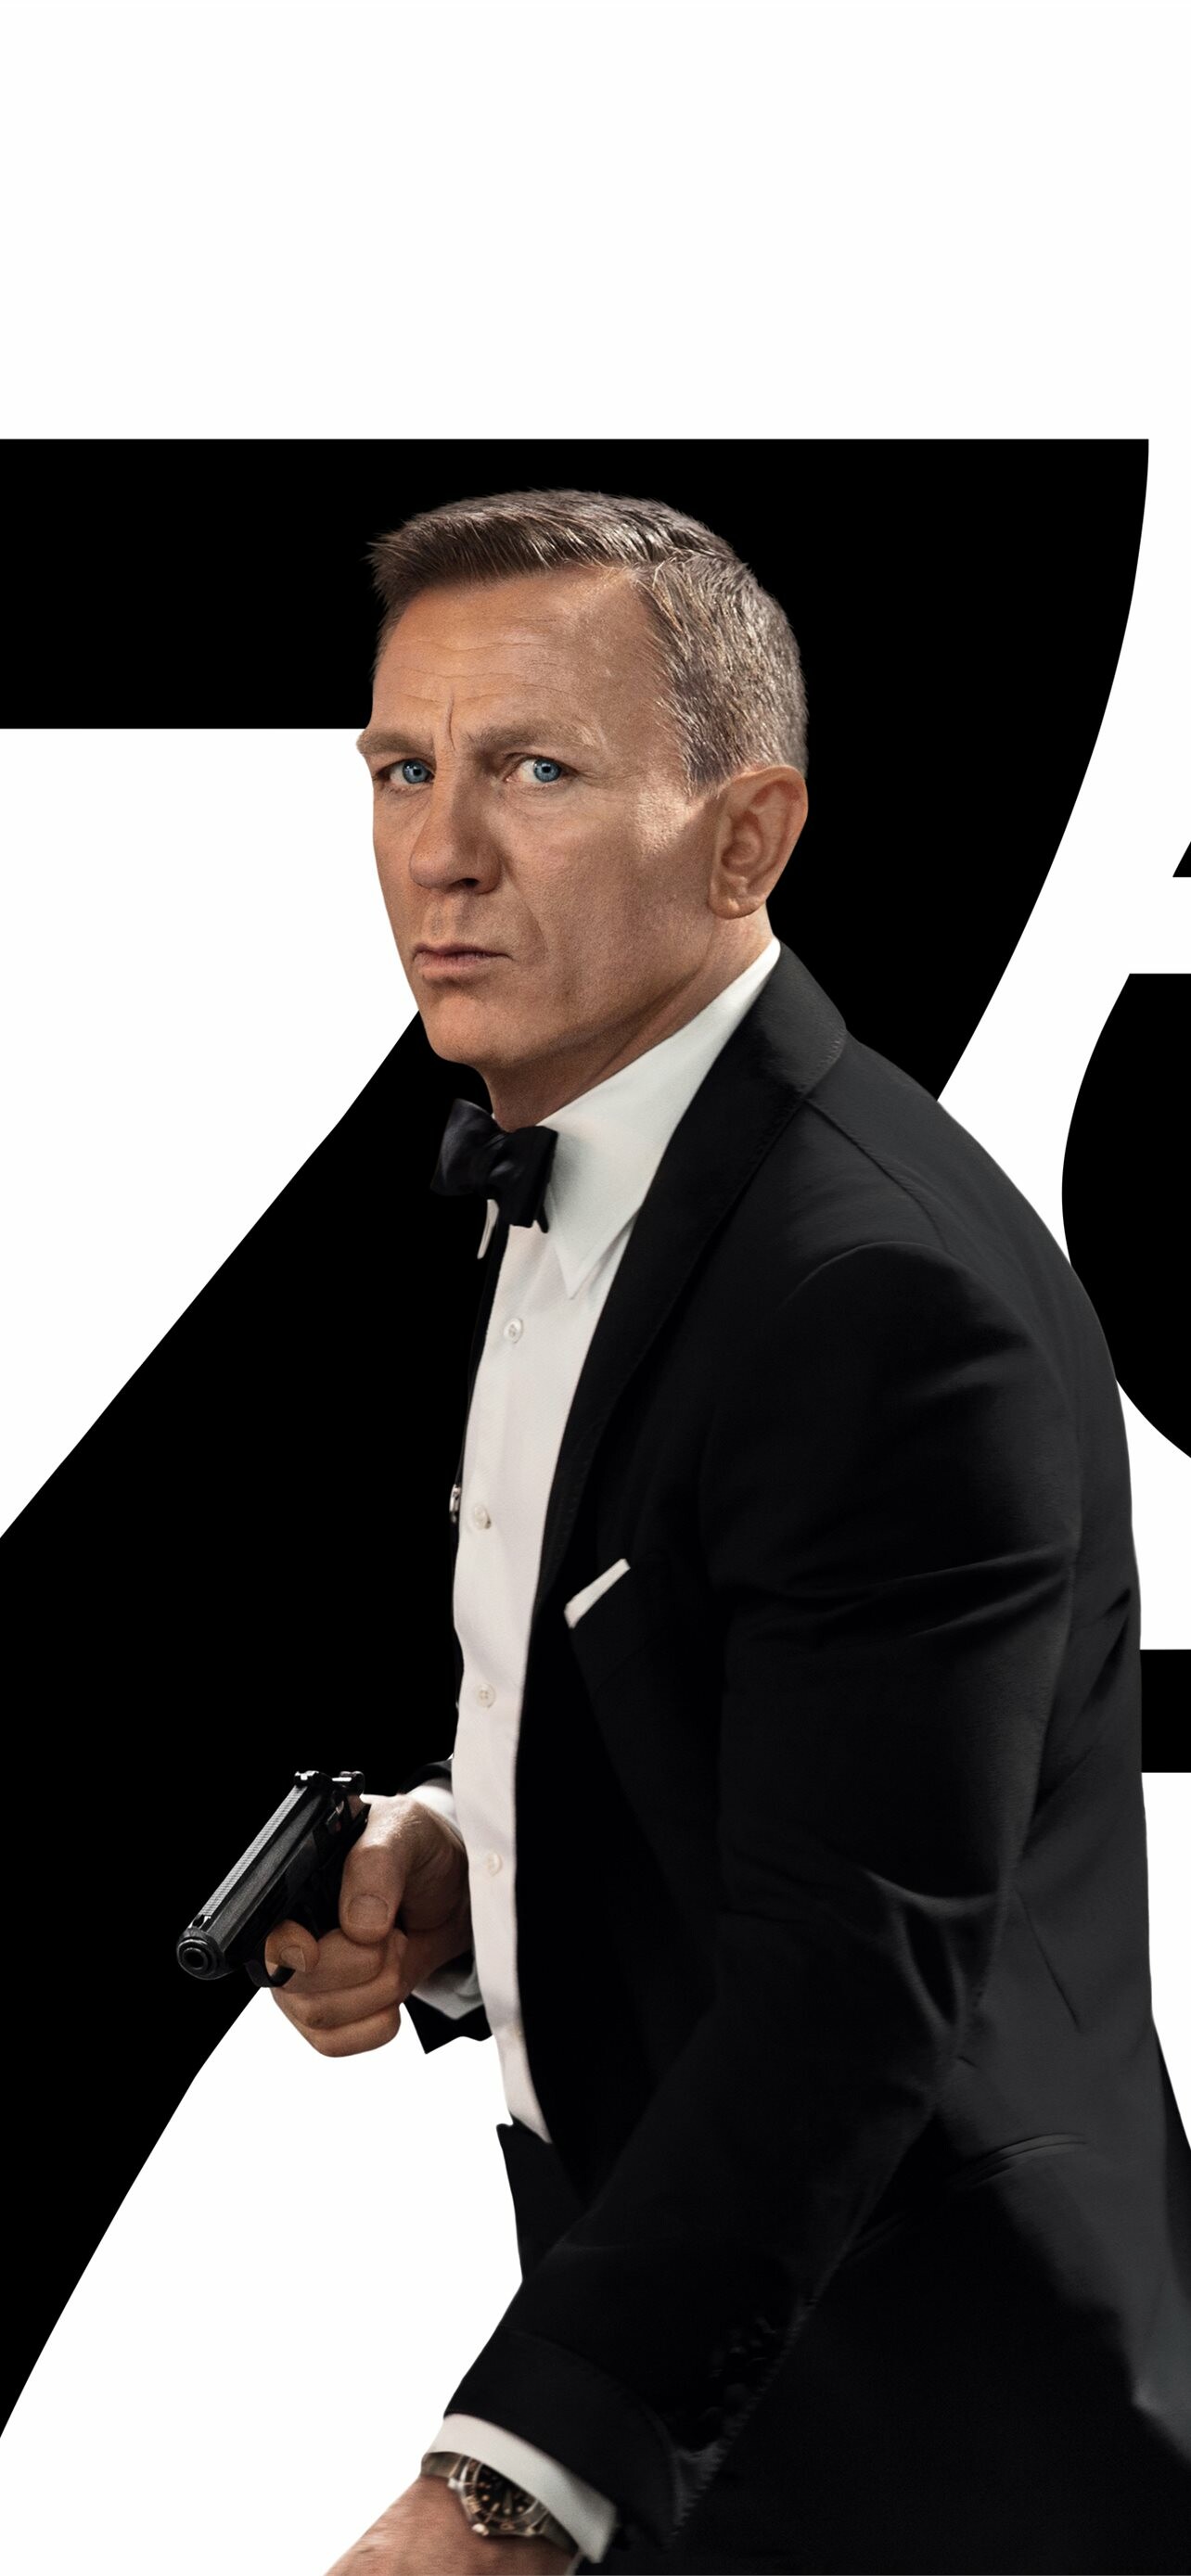 James Bond: Daniel Craig as 007 in No Time to Die, 2021 movie. 1290x2780 HD Wallpaper.